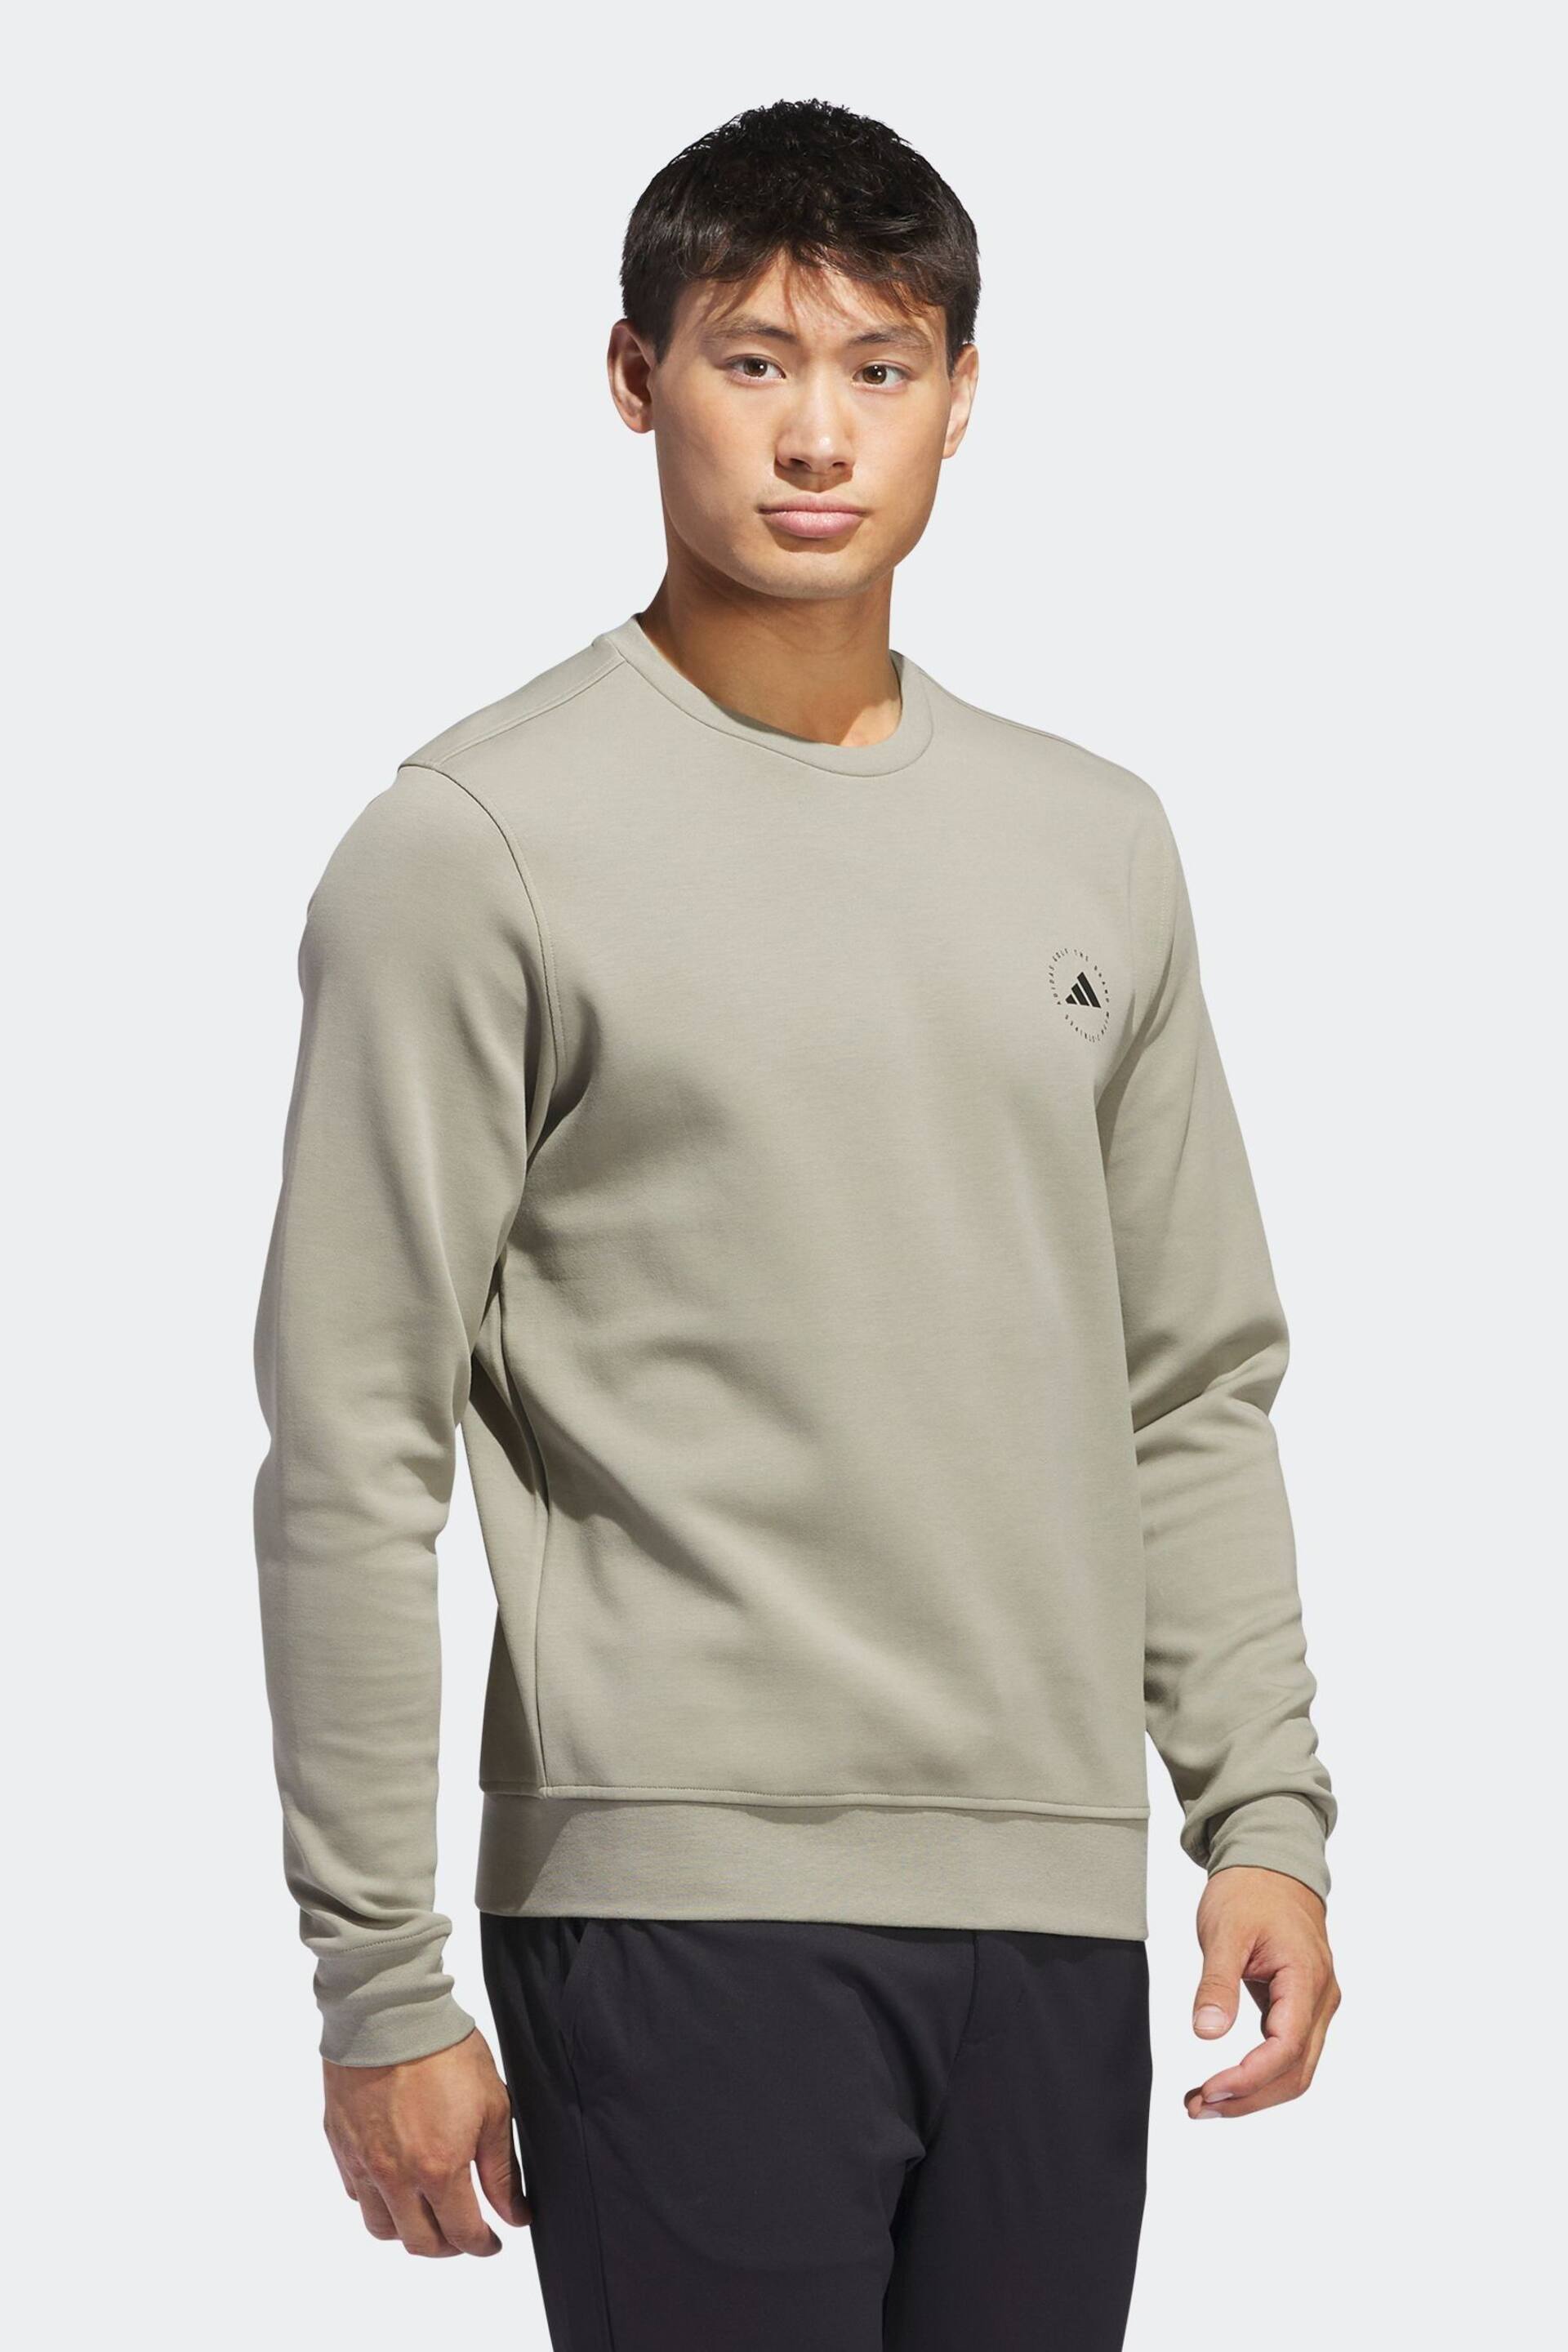 adidas Golf Pebble Crewneck Sweatshirt - Image 1 of 6